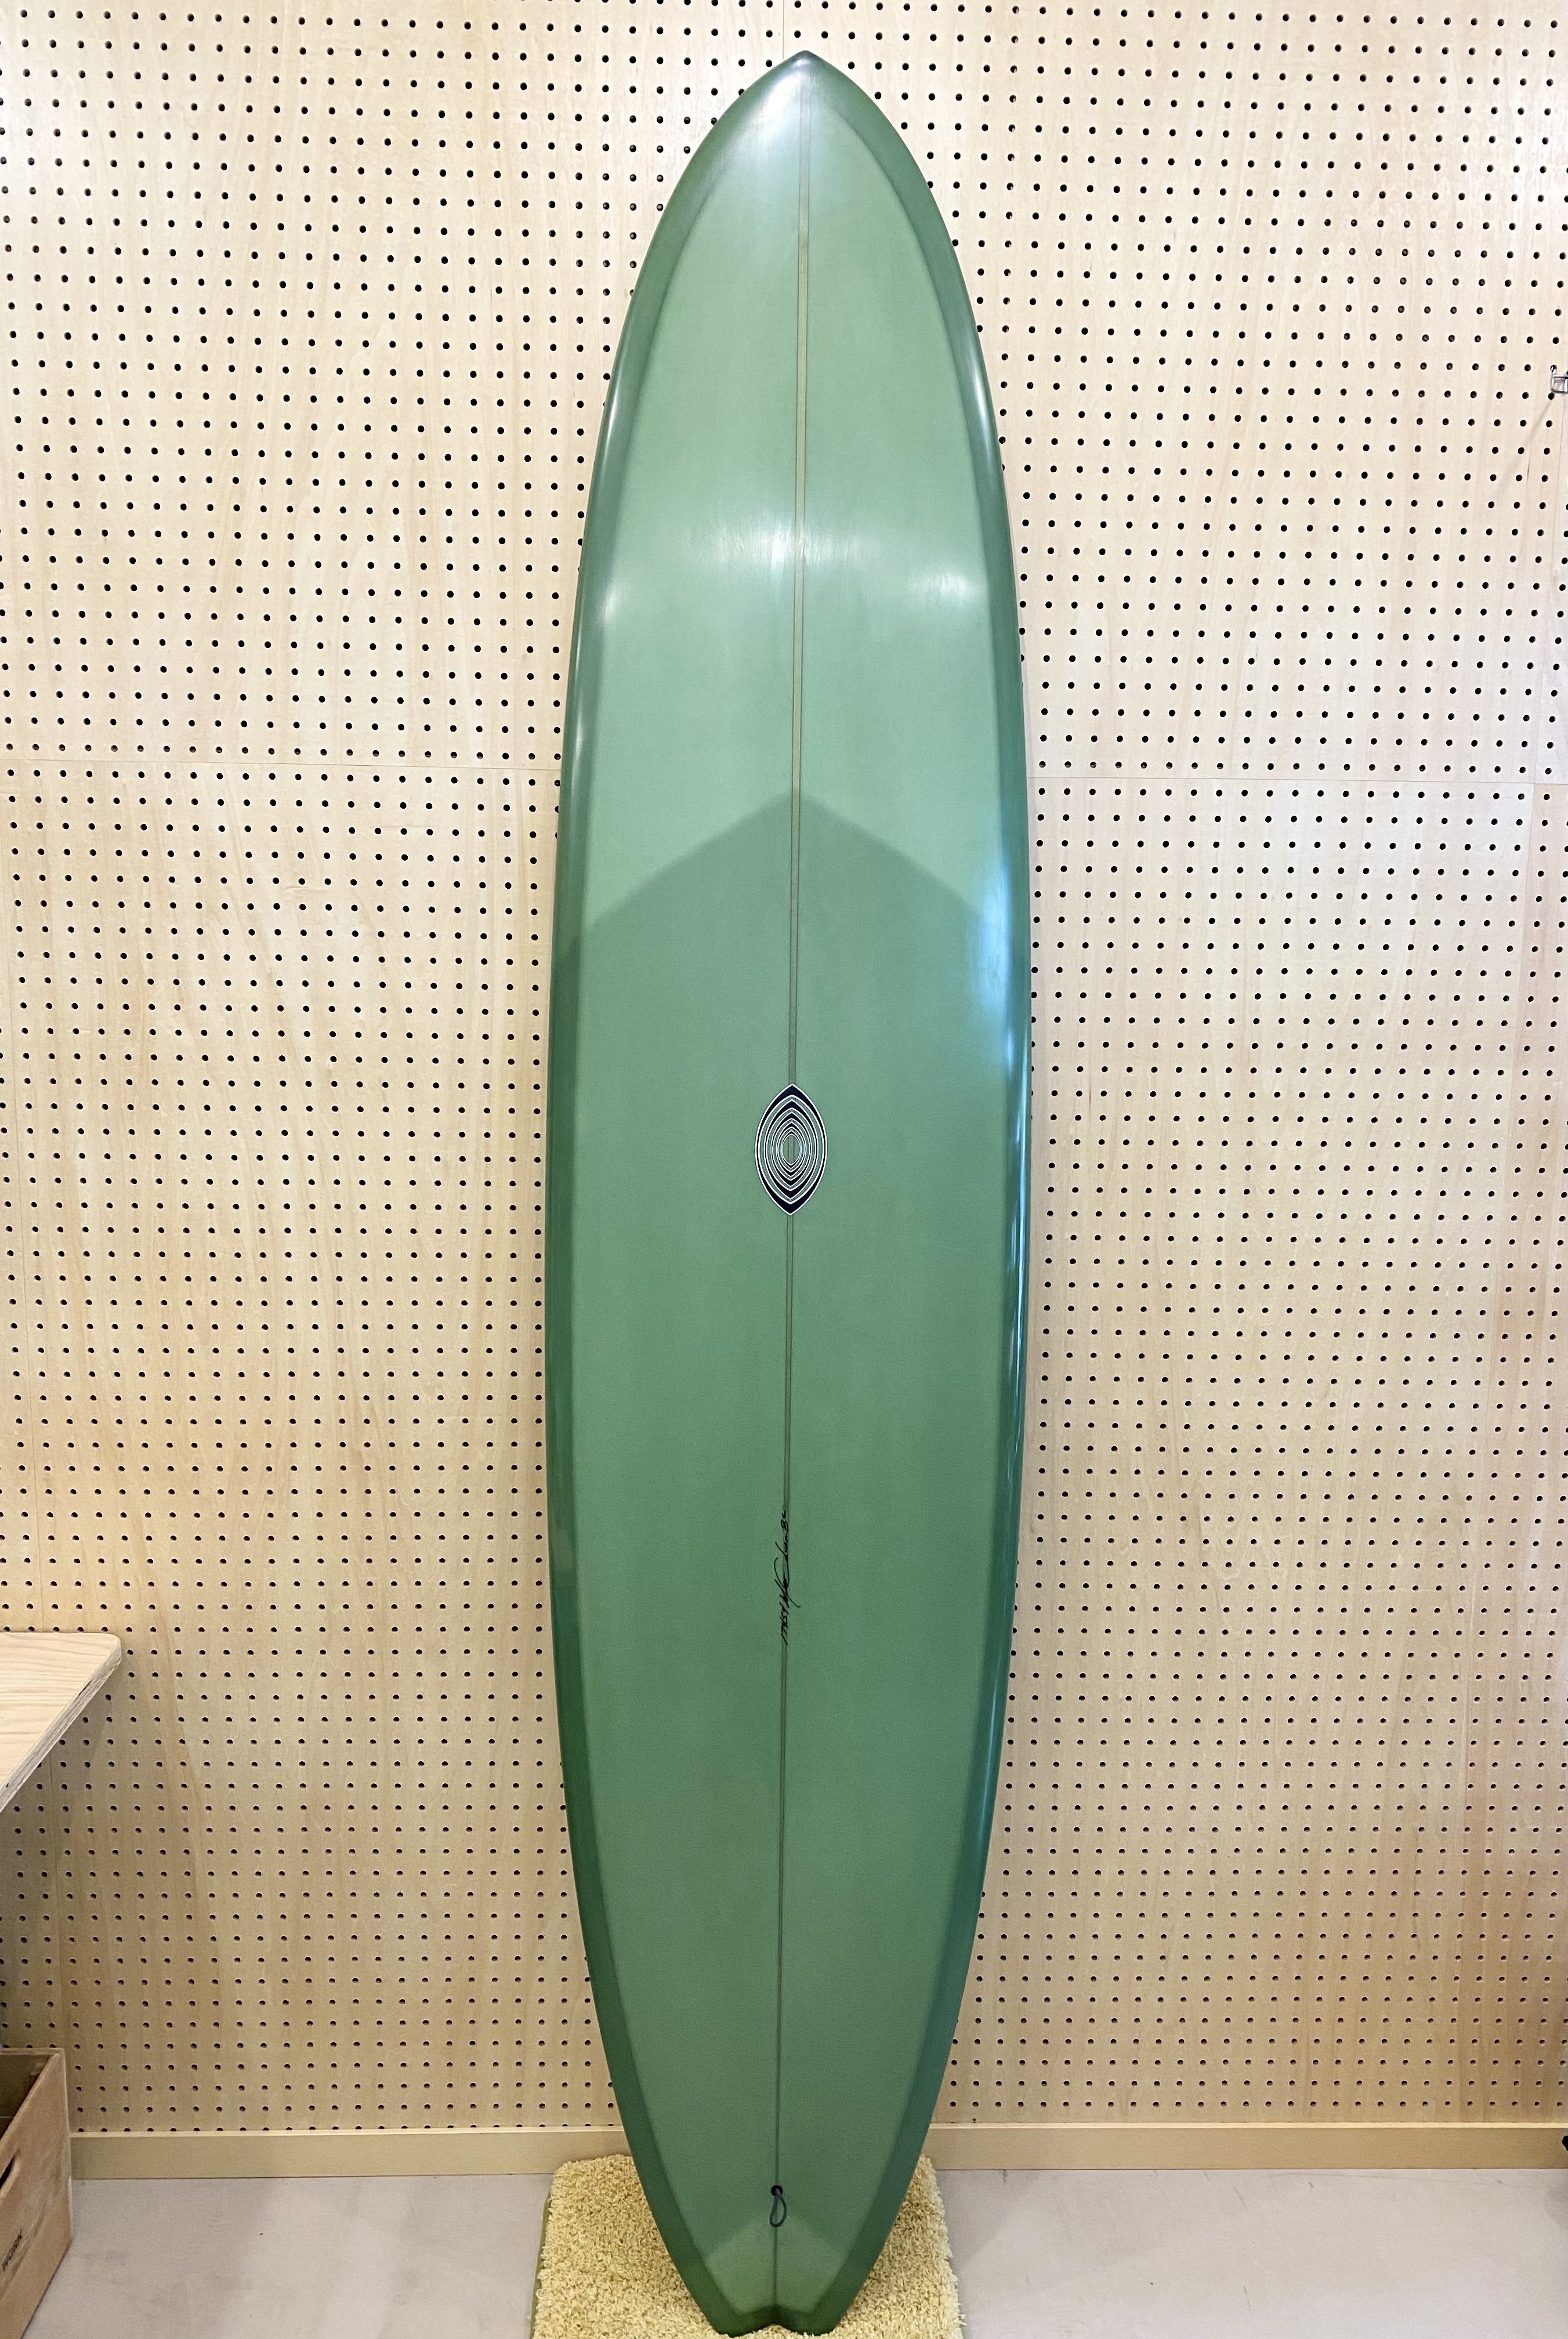 USED (BING SURFBOARDS Pig Former 8.6)|沖縄サーフィンショップ「YES